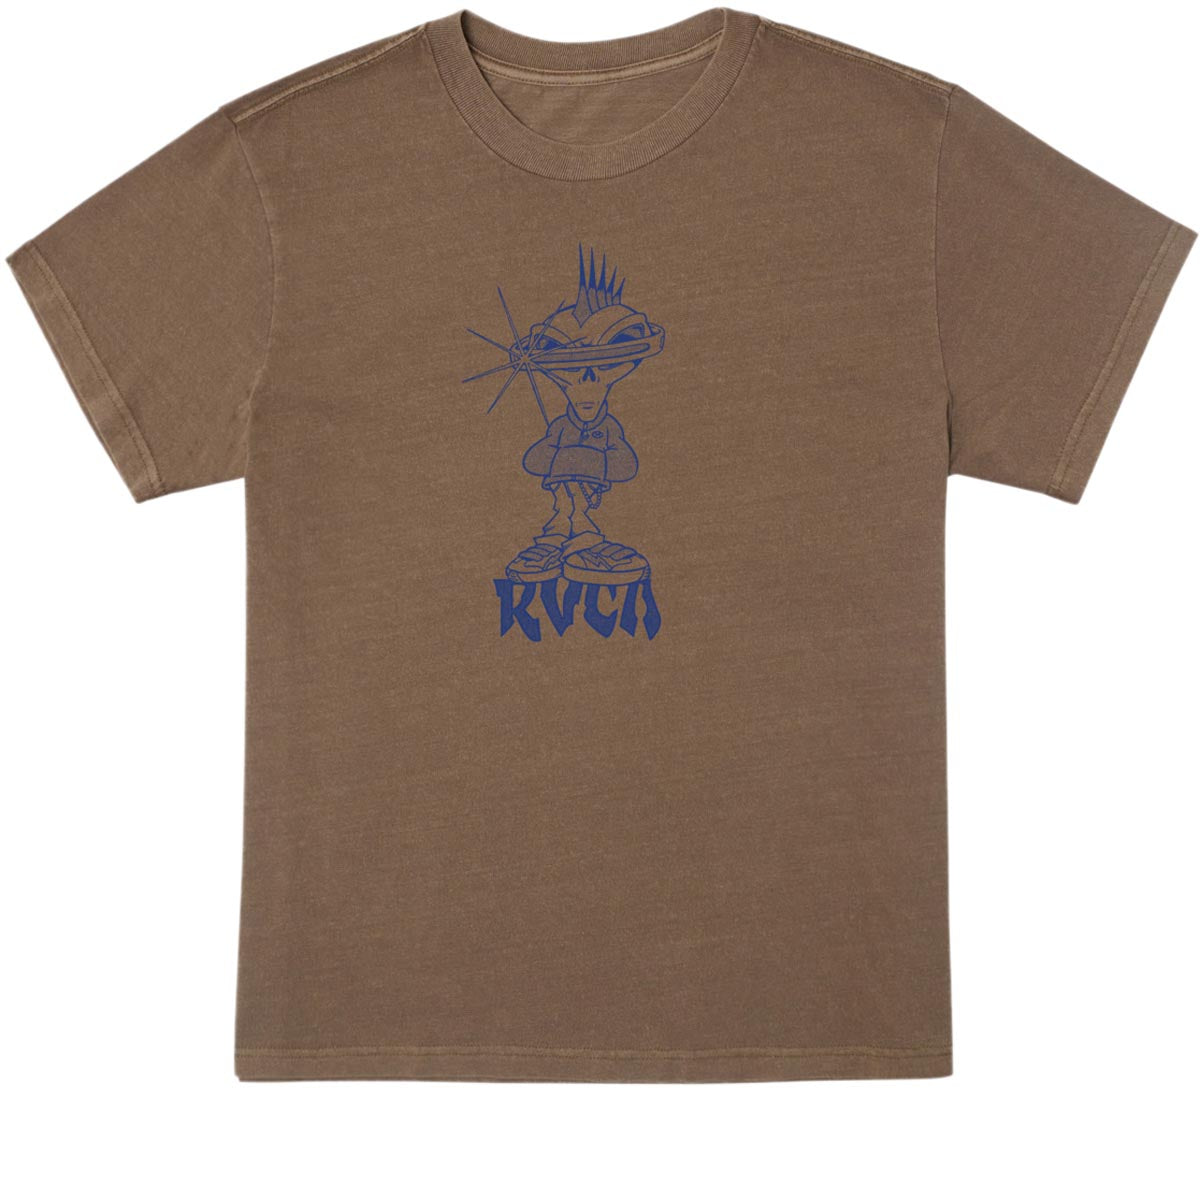 RVCA Believe T-Shirt - Rawhide image 1